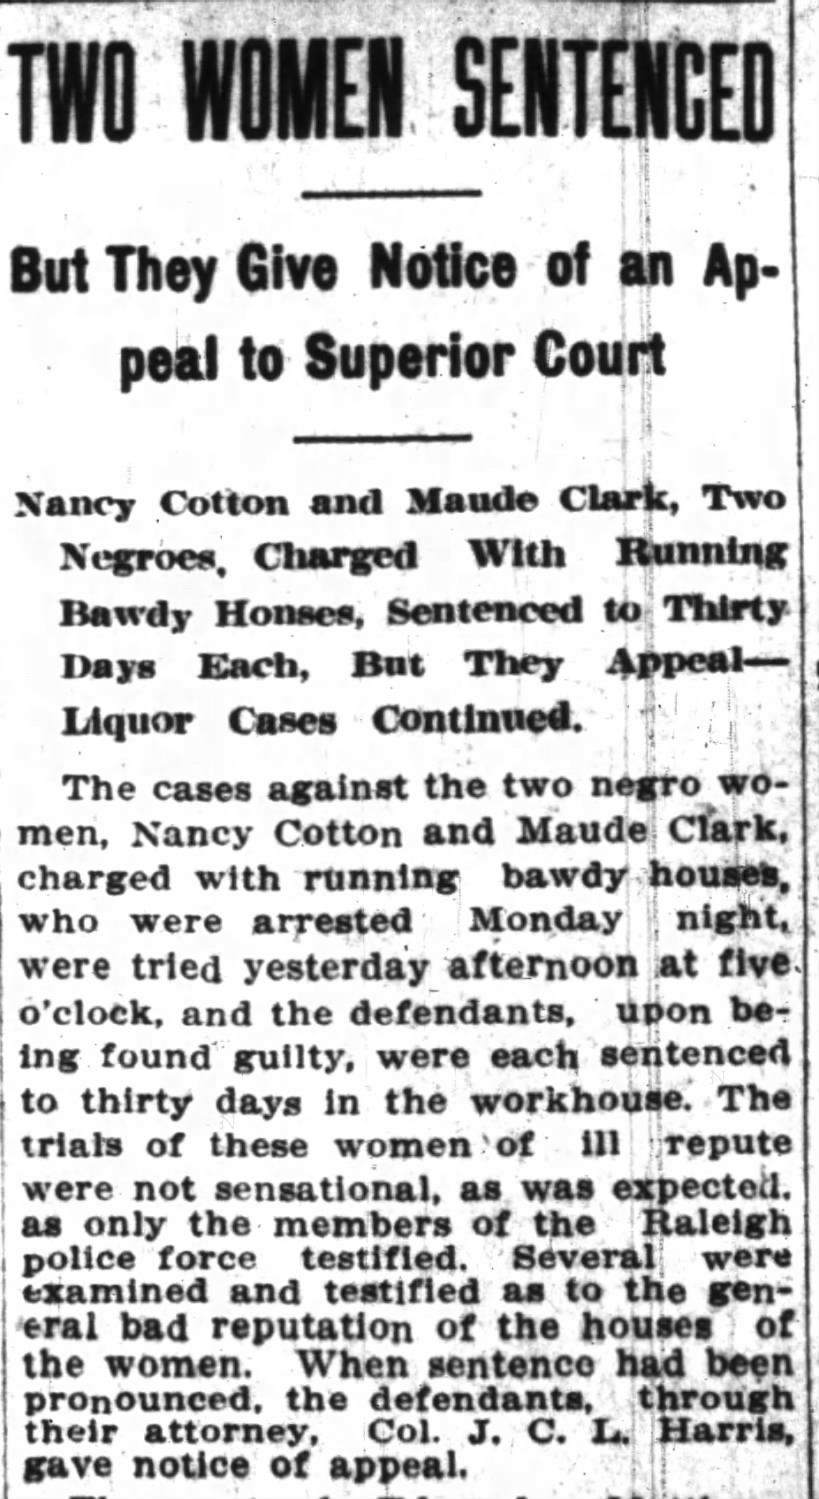 Nancy Cotton and Maude Clark